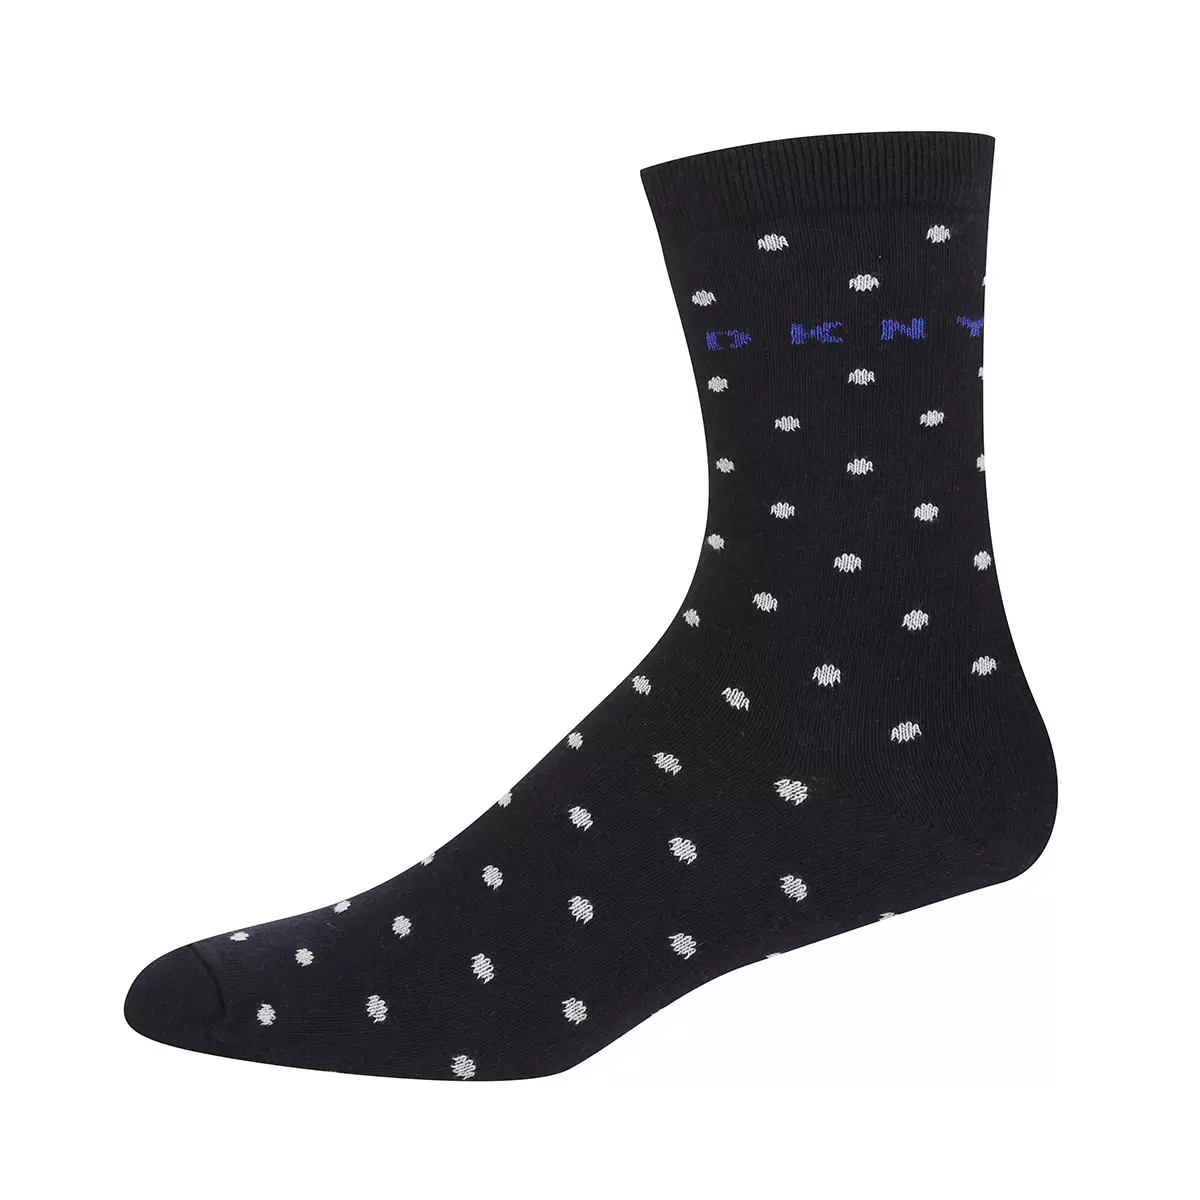 DKNY Women's Patterned Socks, 6 Pack in Animal Combo